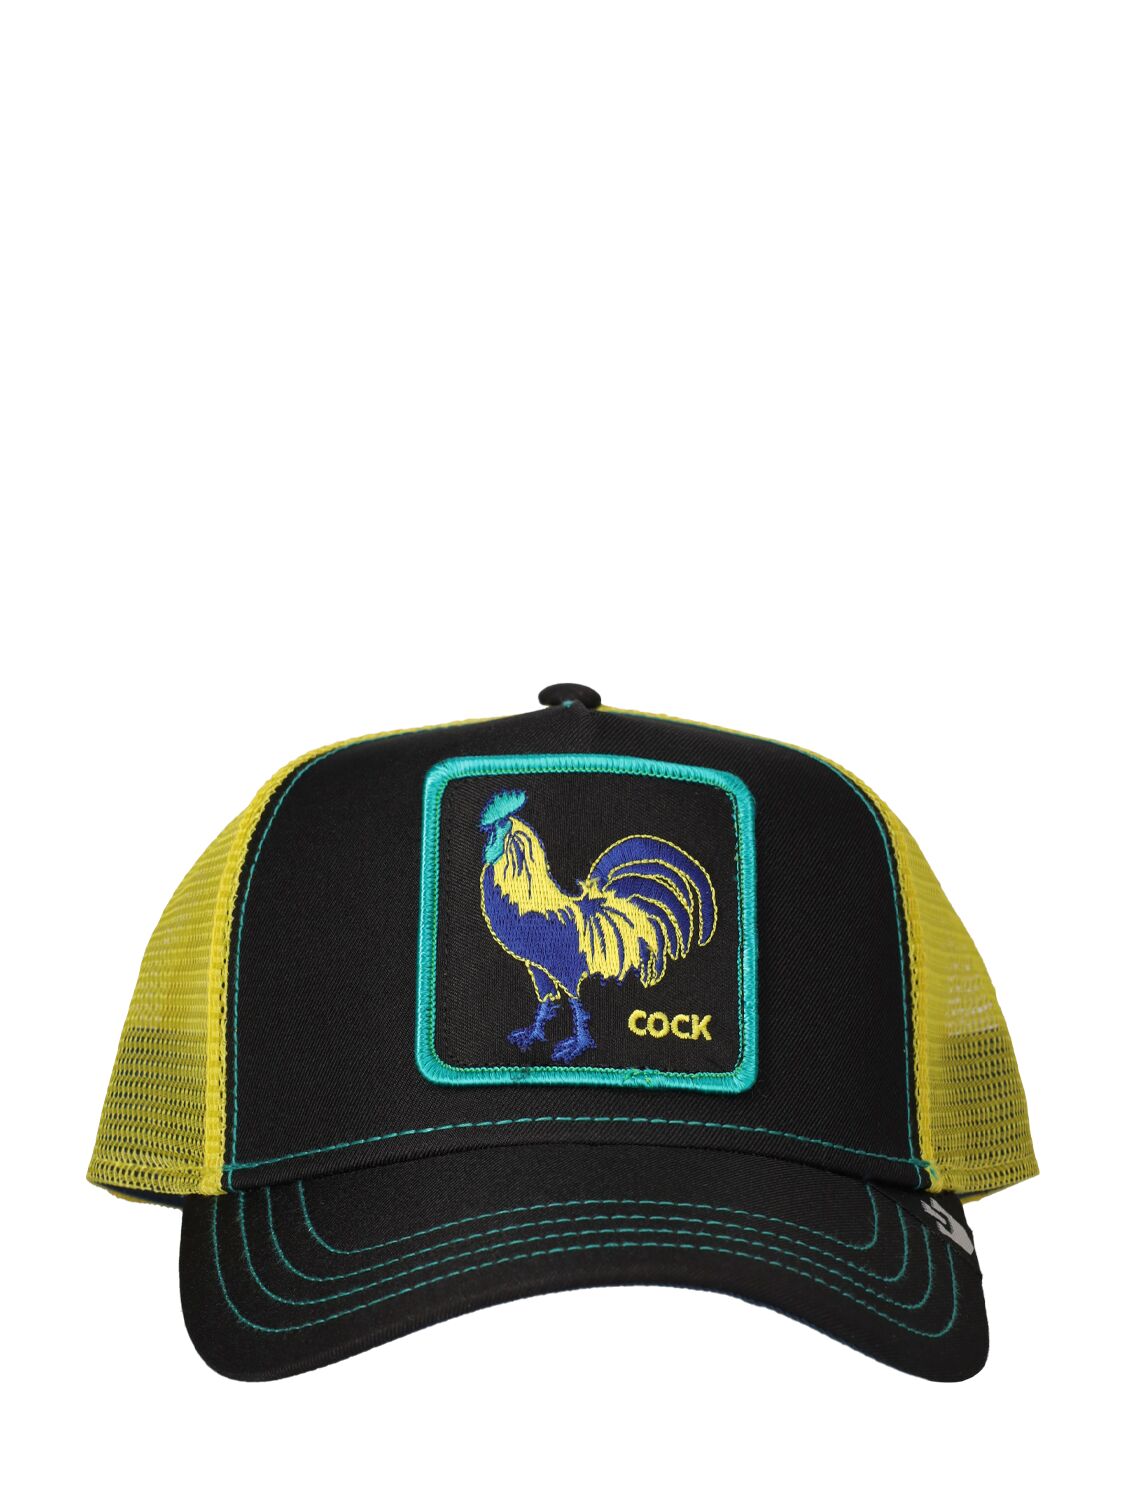 Goorin Bros . Cock Trip Trucker Hat Cotton In Black/green/yellow